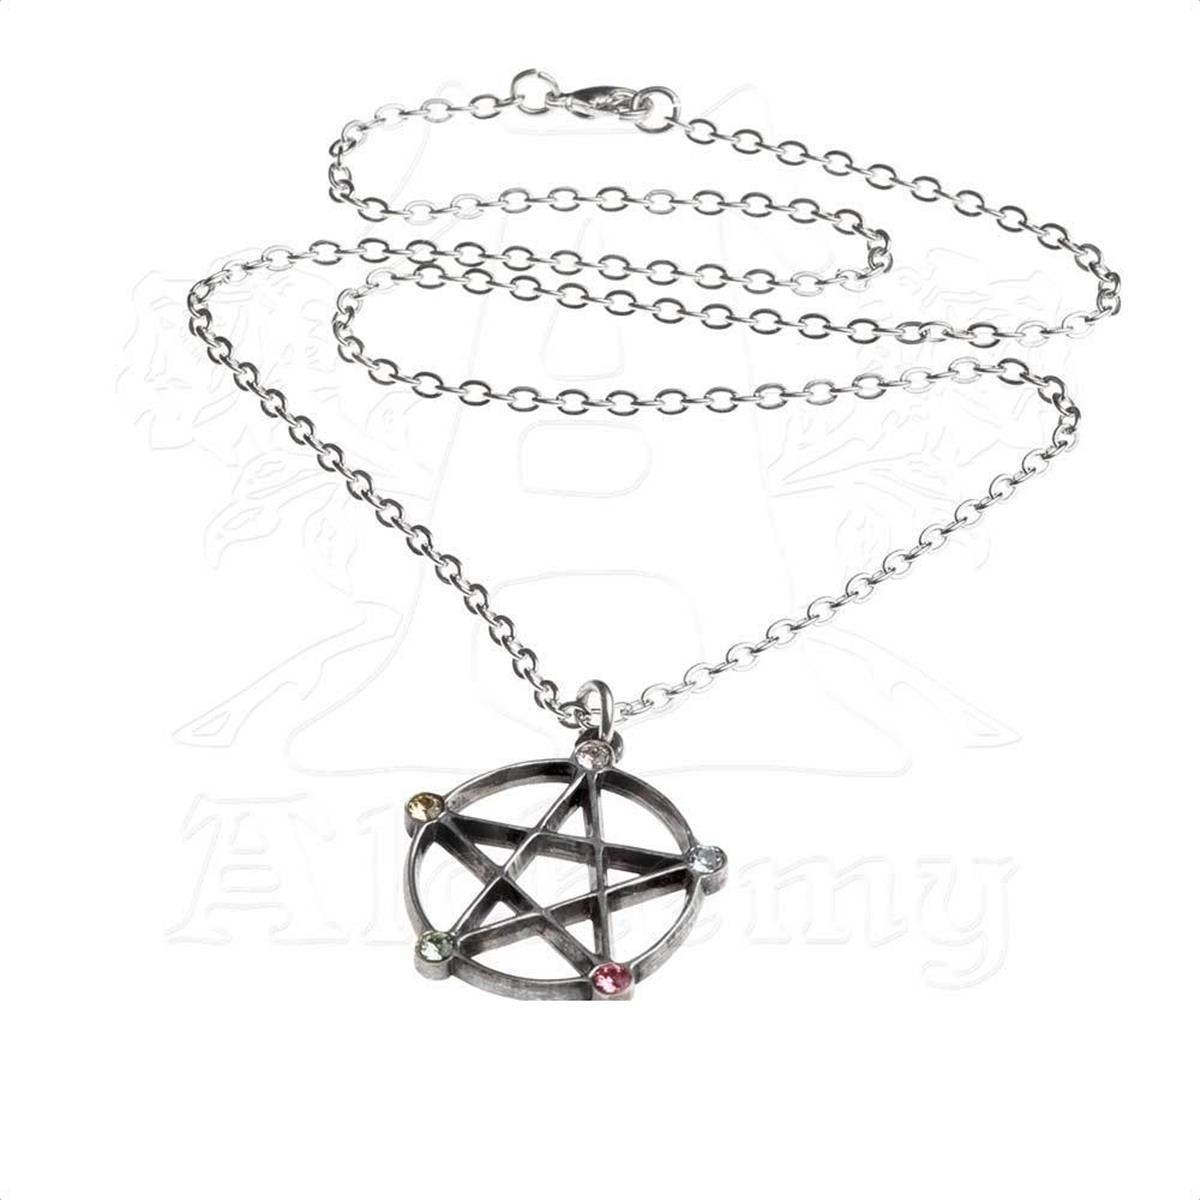 P786 Wiccan Elemental Pentacle Necklace, Pewter & Swarovski Crystals